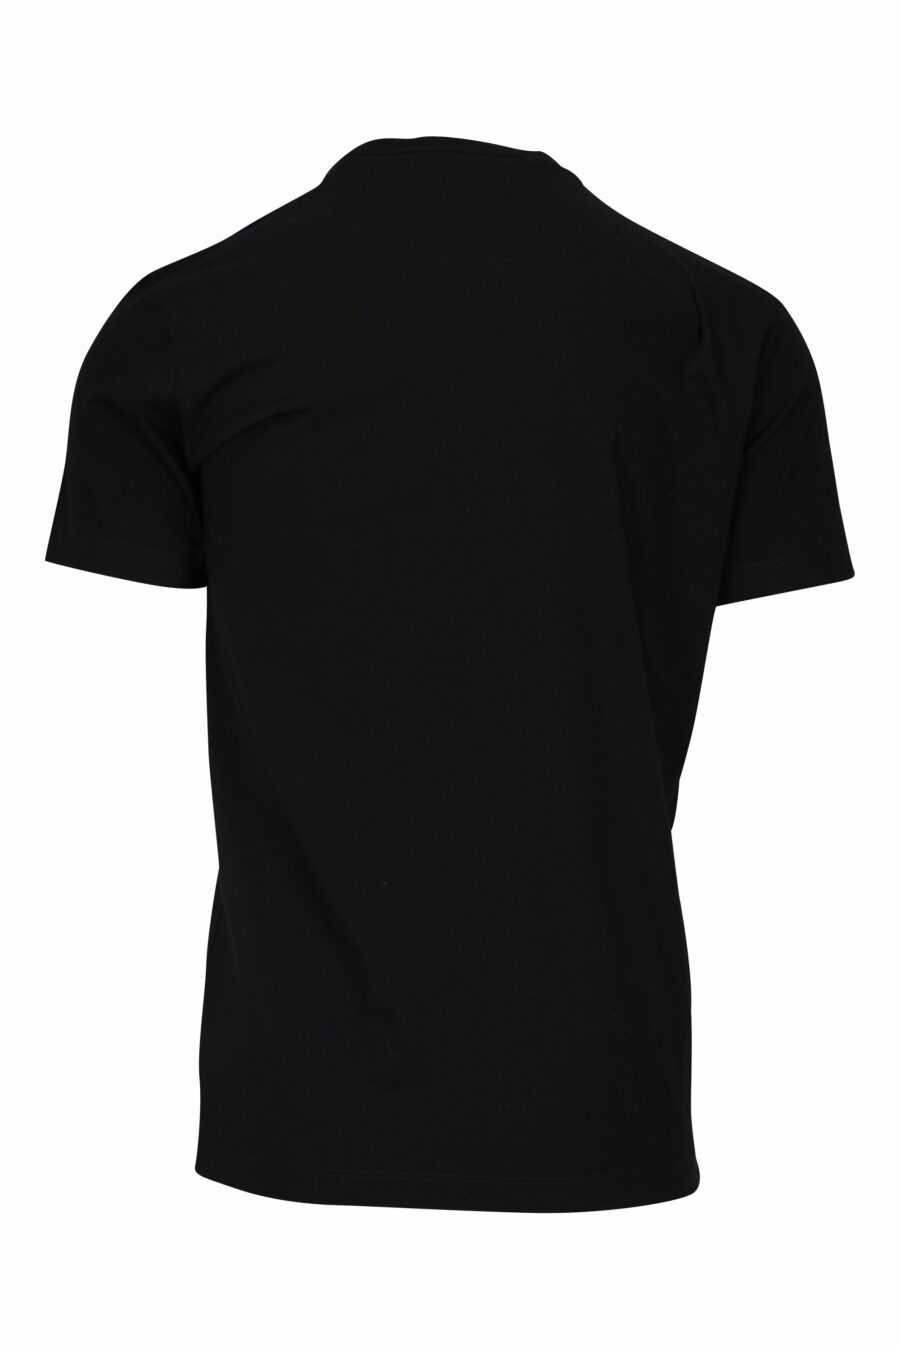 Schwarzes T-Shirt mit "sitckers" Maxilogo - 8054148086725 1